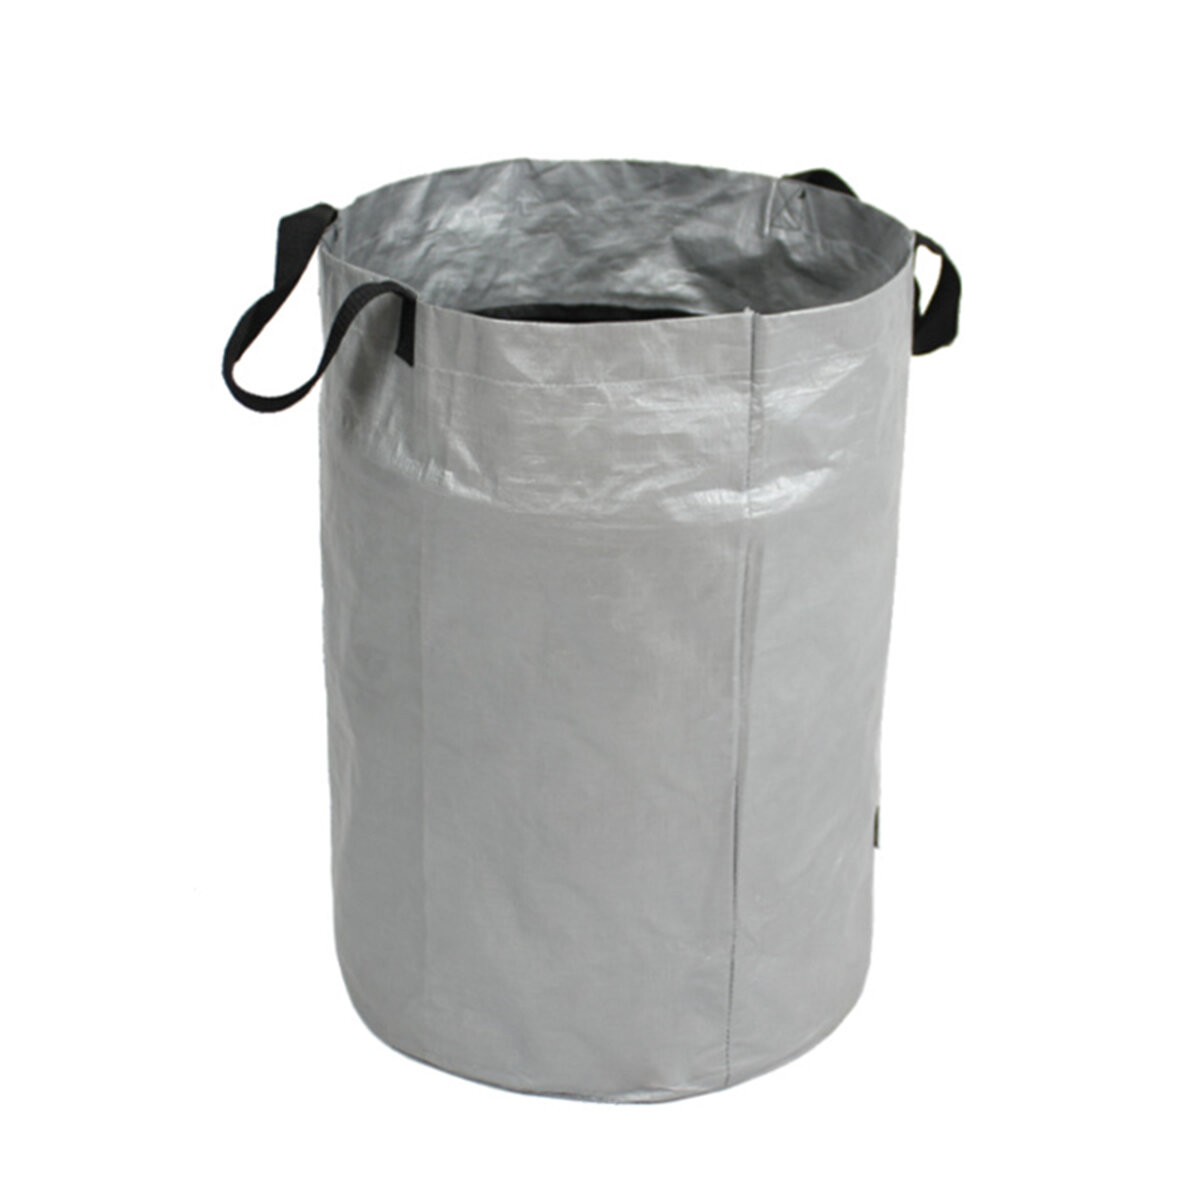 100L Garden Waste PE Bag Reusable Waterproof Leaves Bag for Yard Park